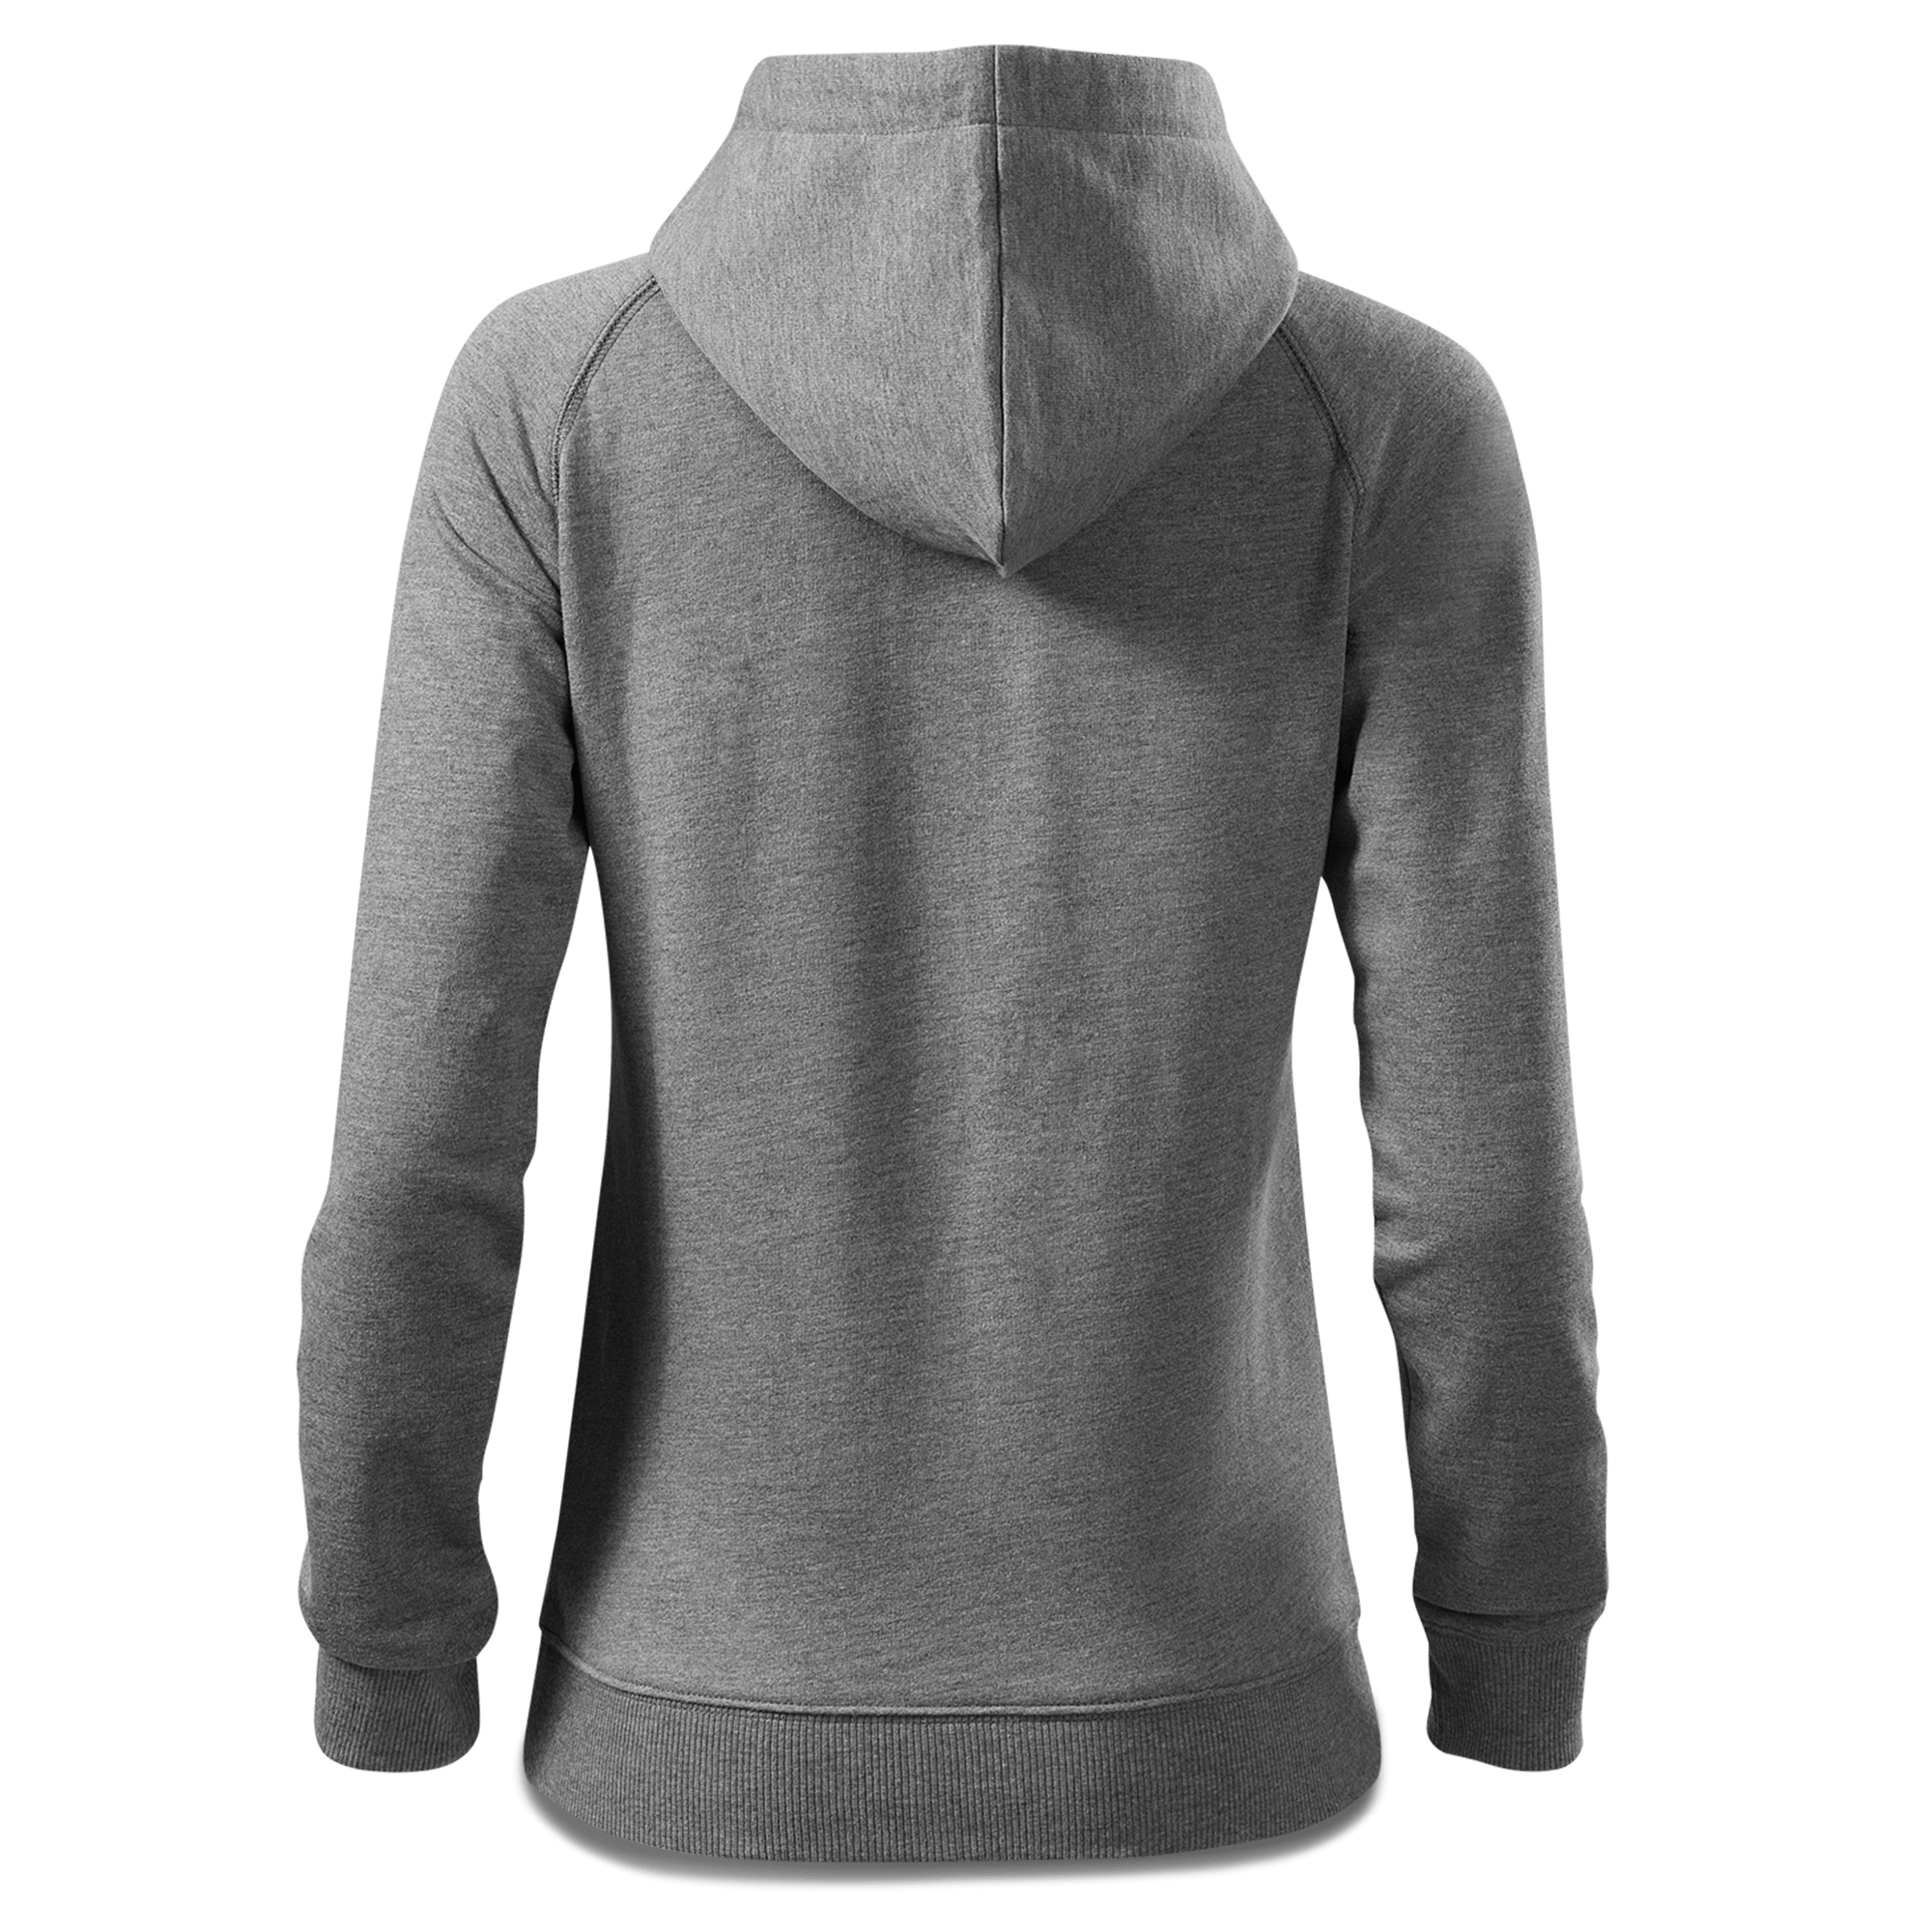 Da Sinzer Winter Edition Sweatshirt Zip Hoody Damen Grau Meliert Kreut Back